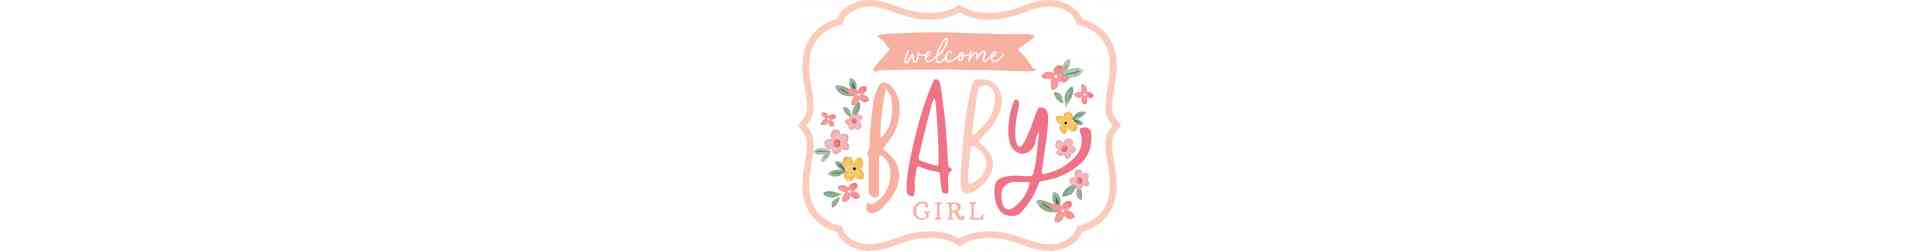 WELCOME BABY GIRL